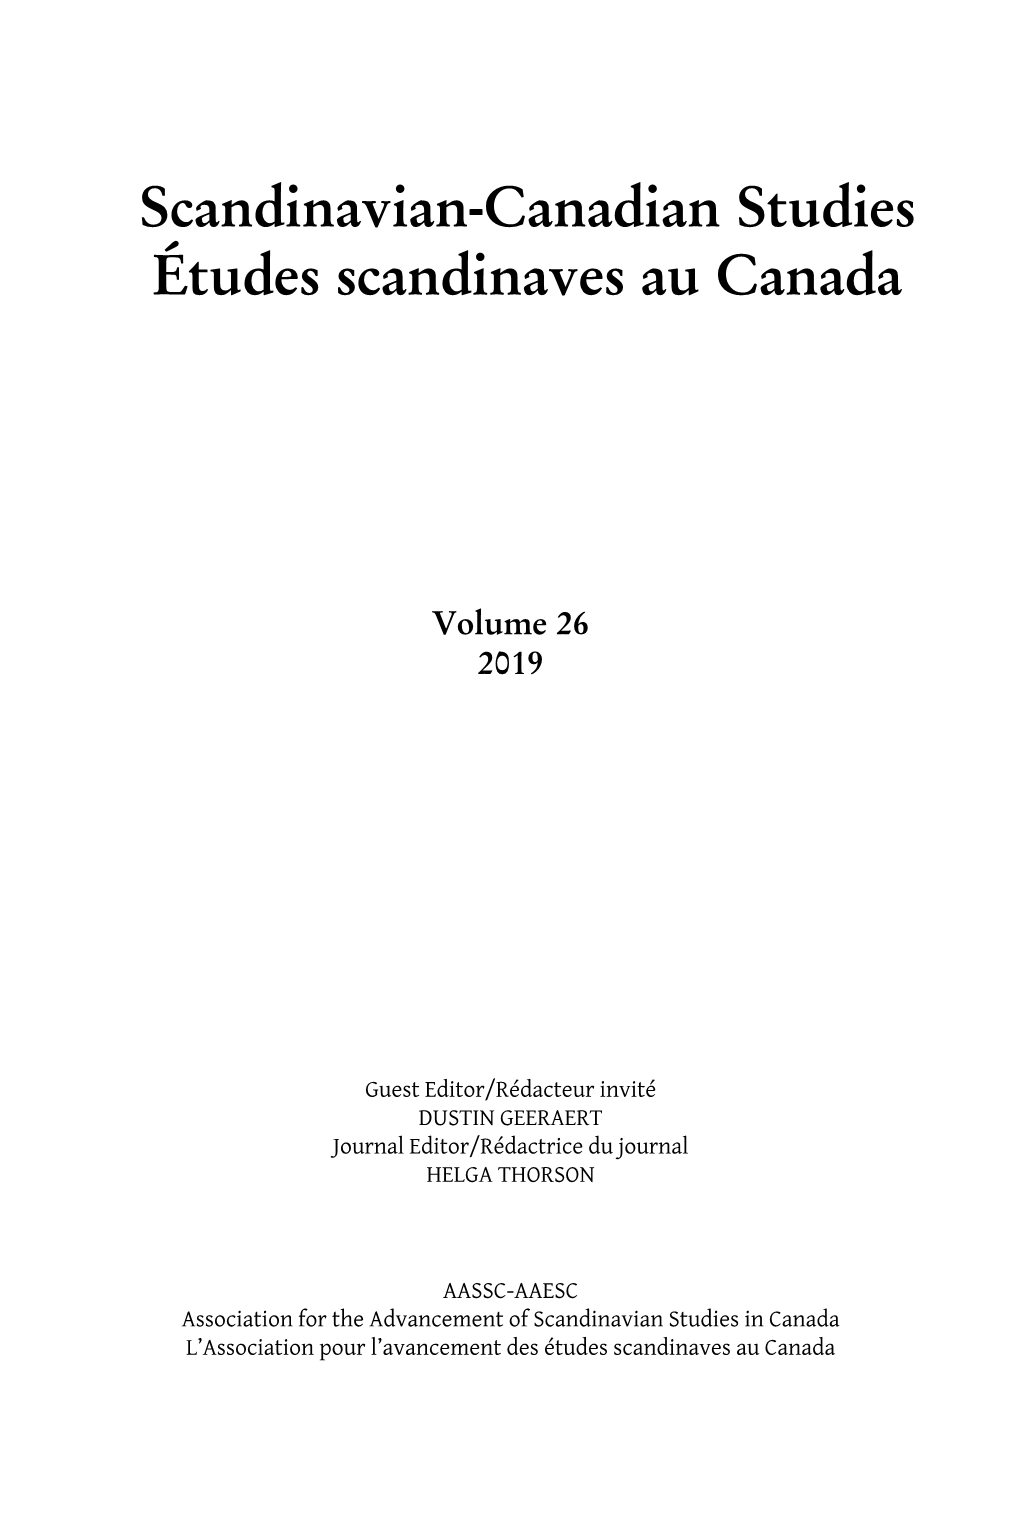 Scandinavian-Canadian Studies / Études Scandinaves Au Canada